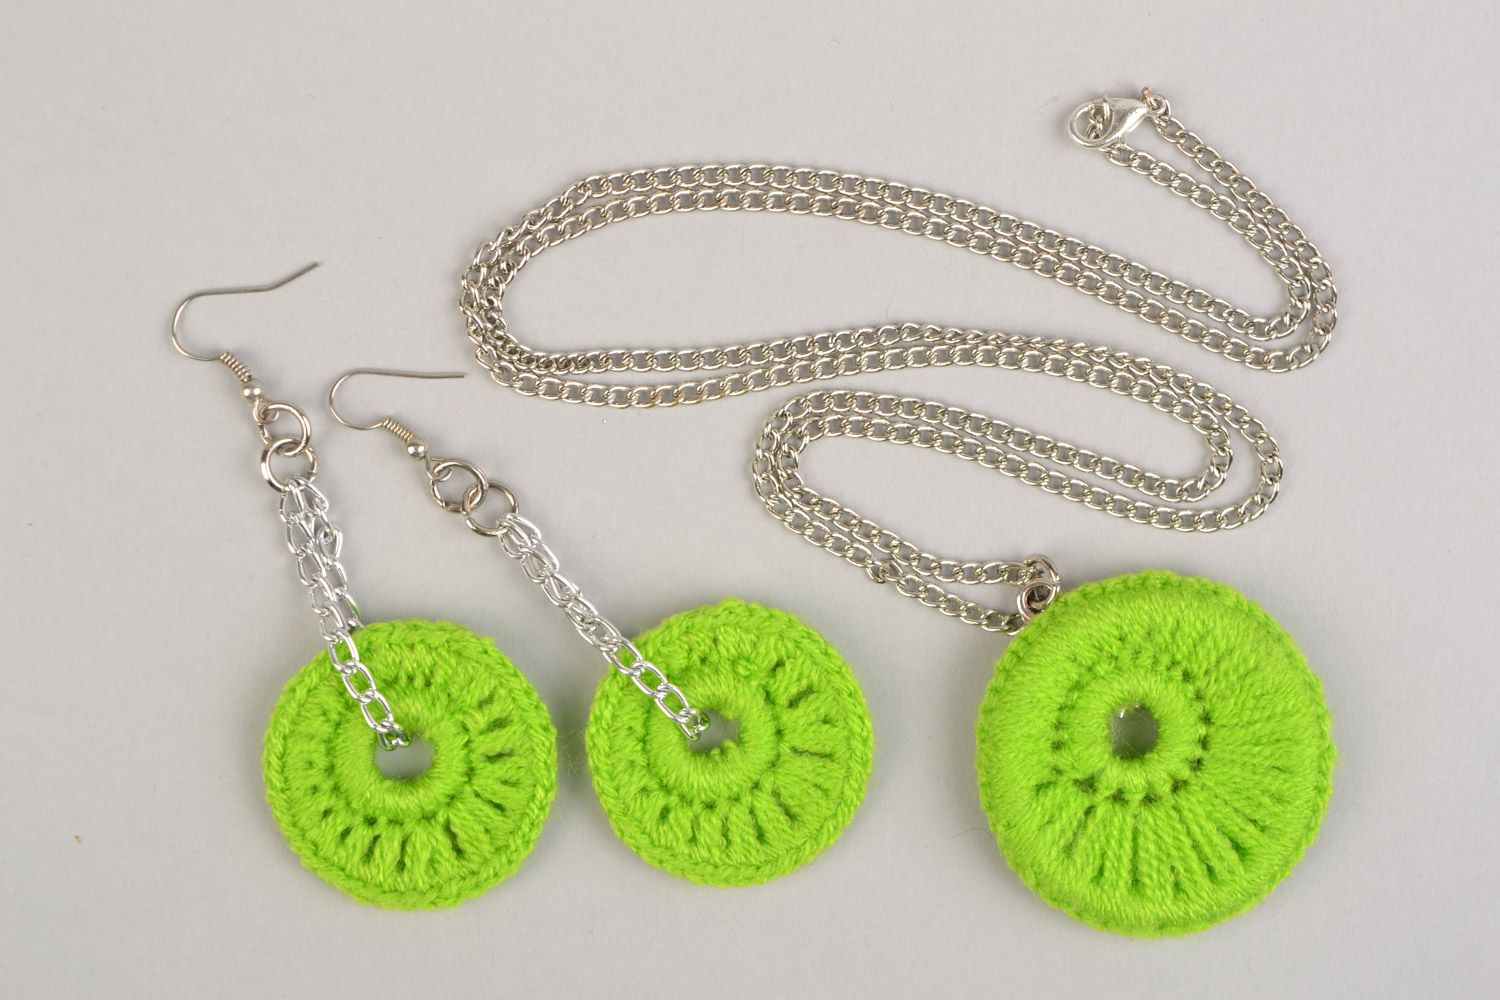 Handmade thread woven jewelry set 2 items yellow green earrings and pendant photo 5